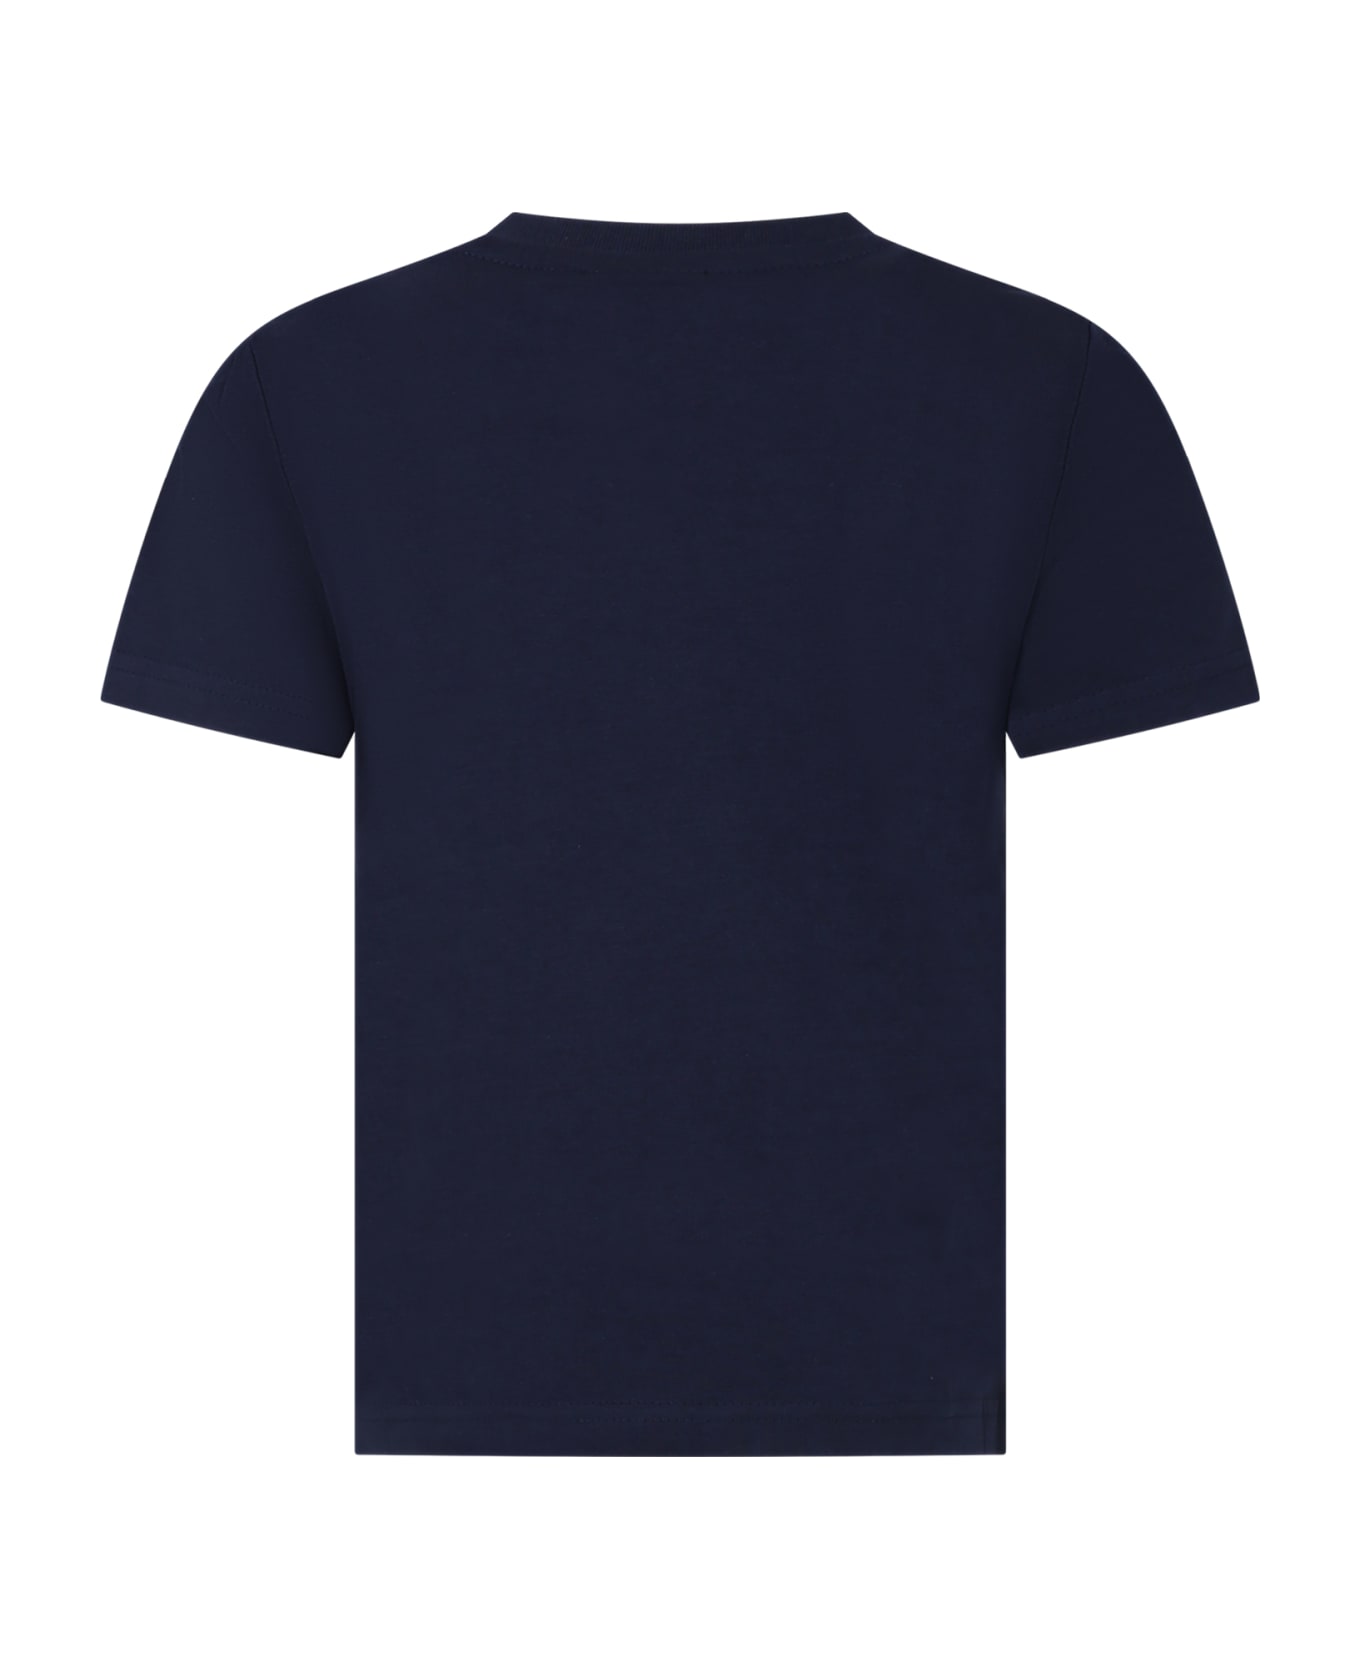 Hugo Boss Blue T-shirt For Boy With Logo - Blu